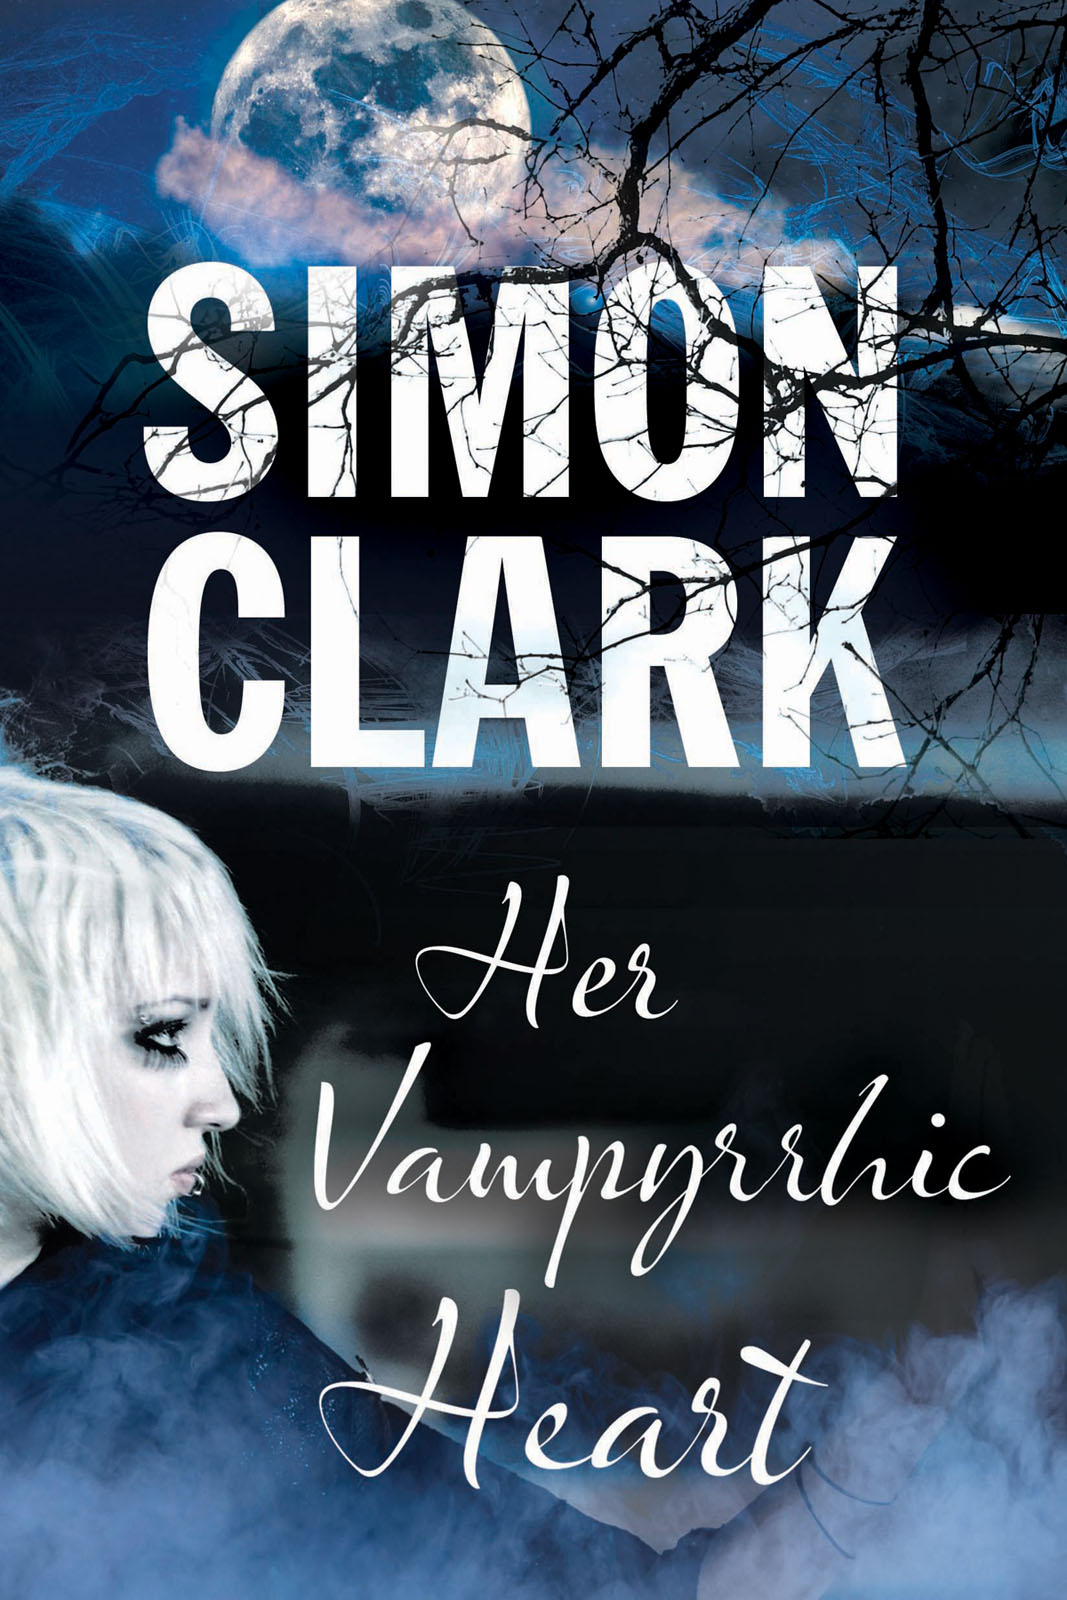 Her Vampyrrhic Heart (2013) by Simon Clark